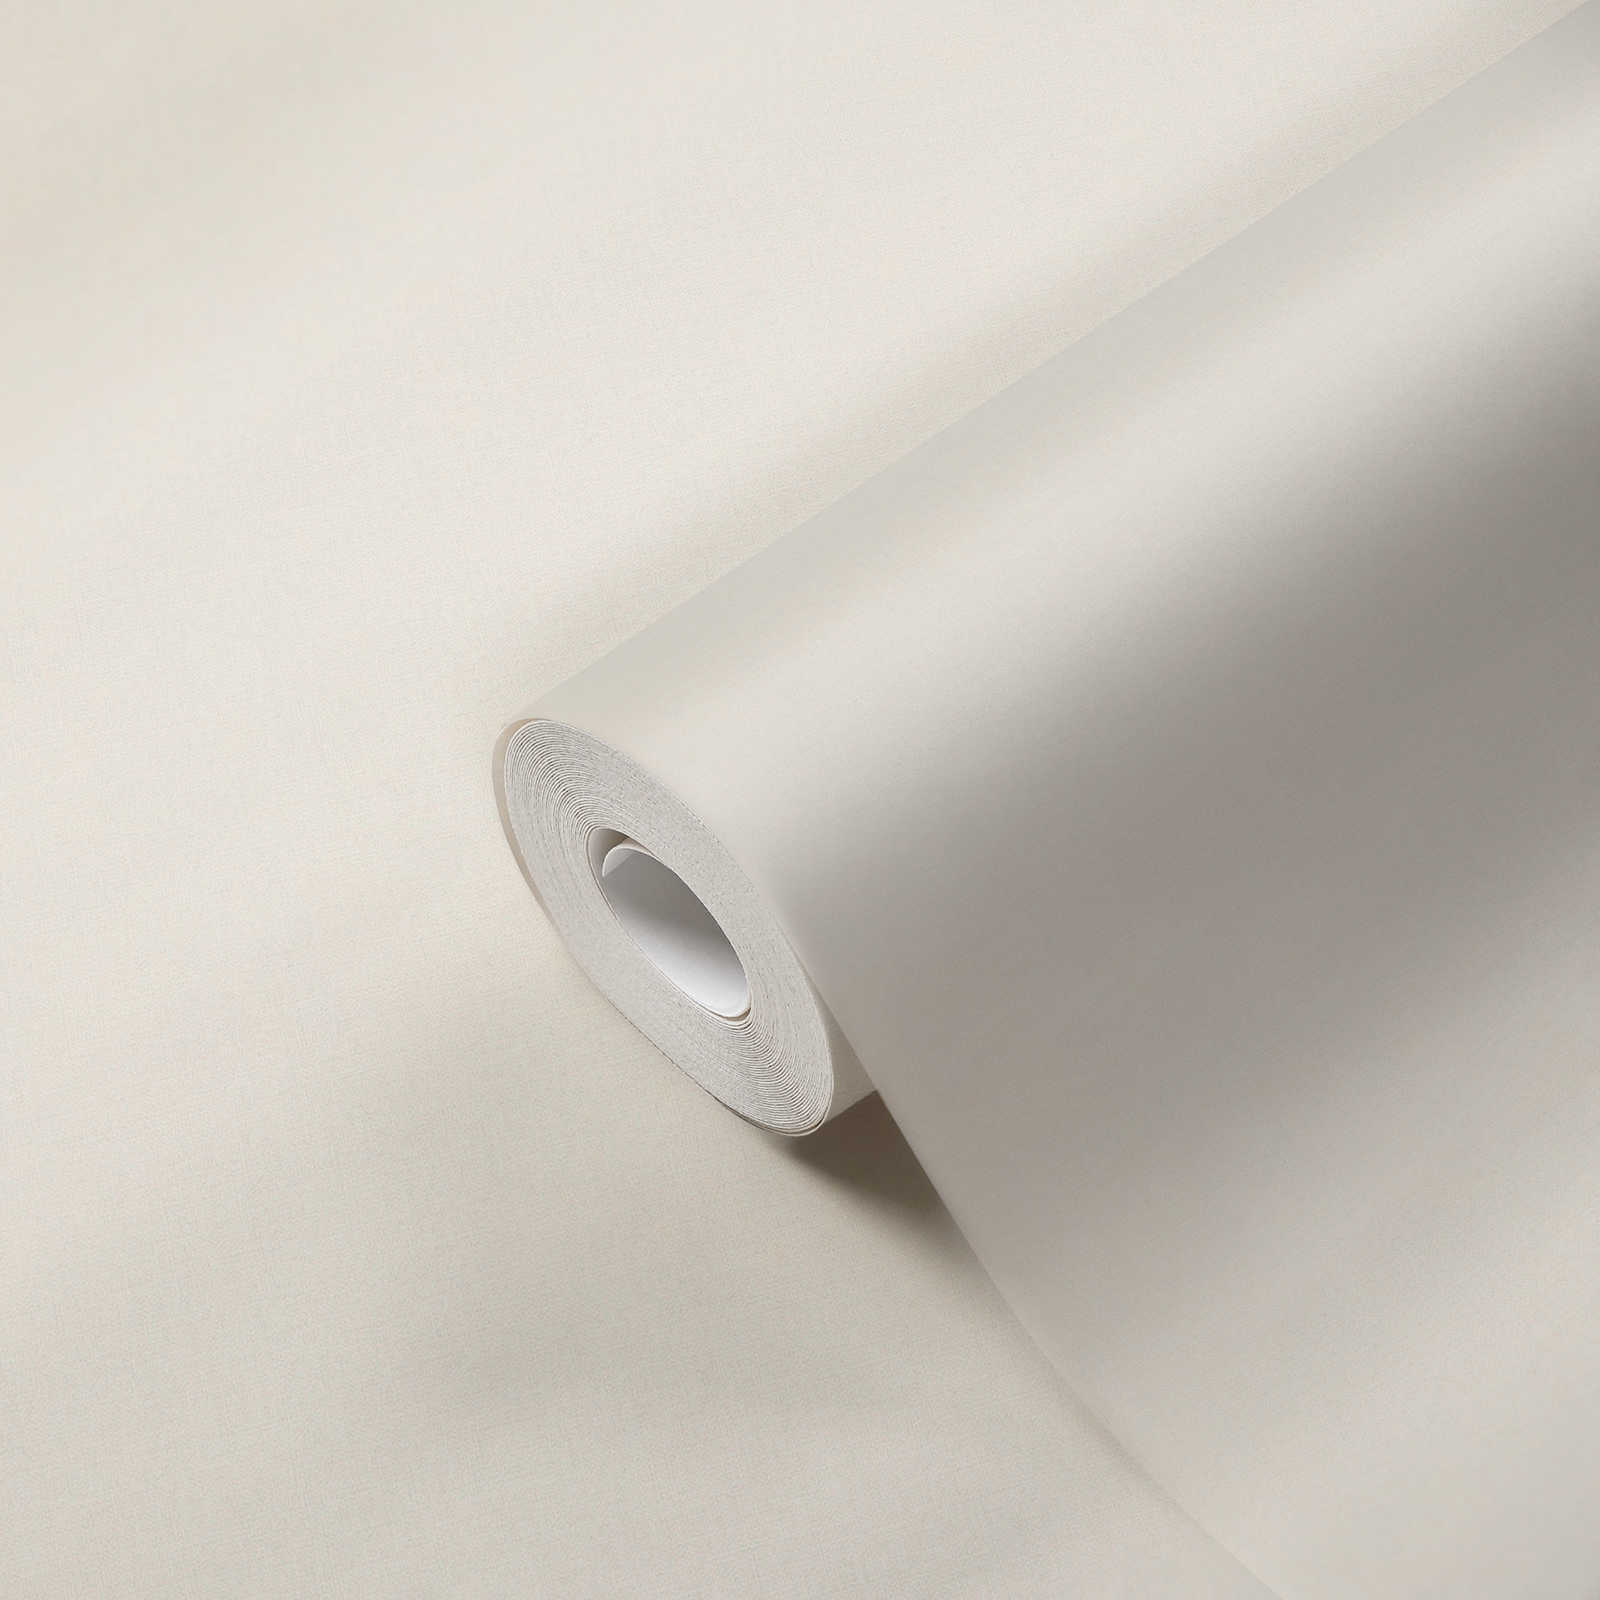             Non-woven wallpaper plain with light sheen - white
        